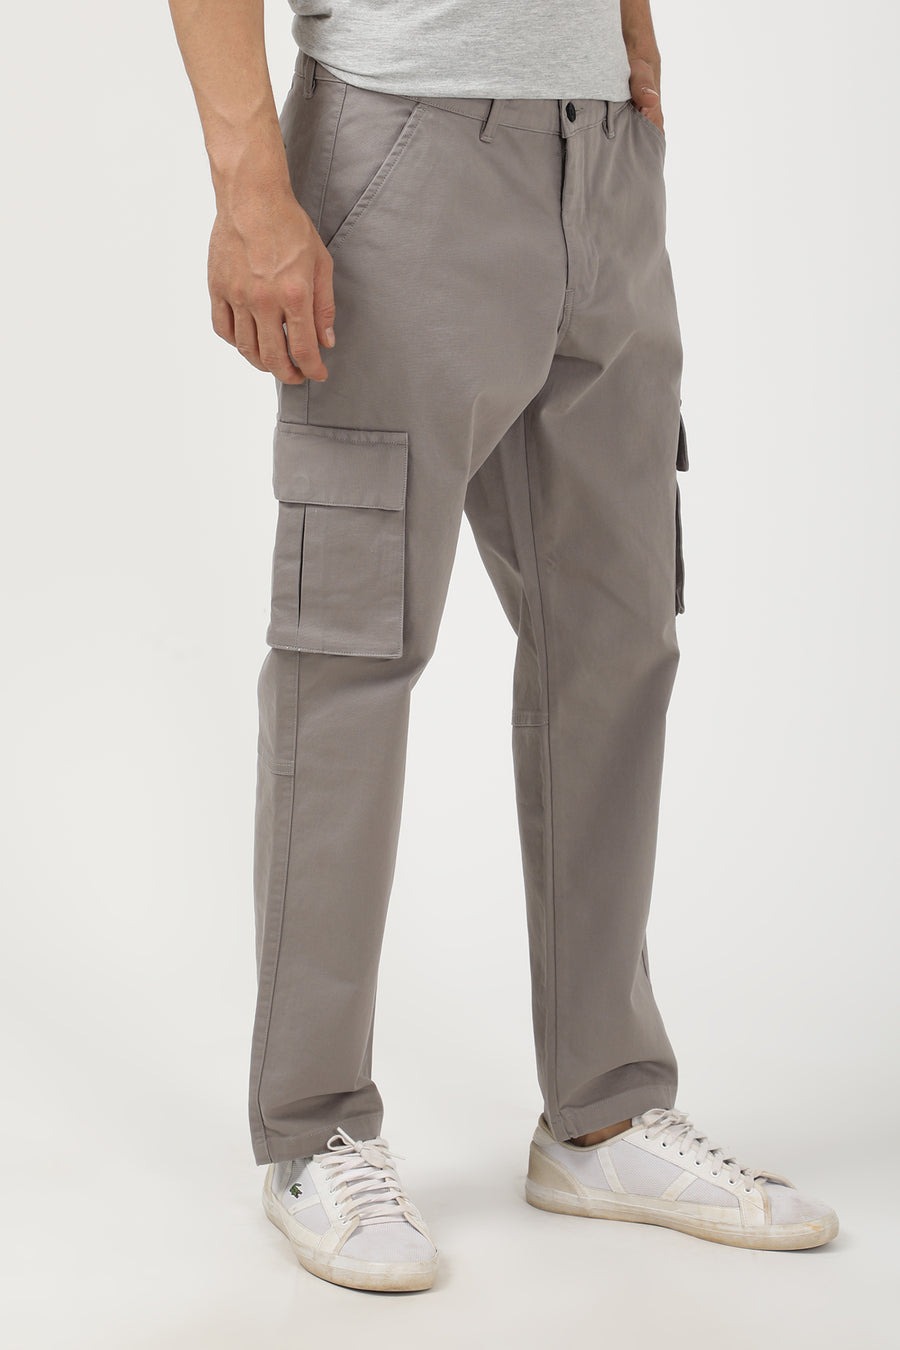 Creed - Comfort Cargo Trouser - Grey